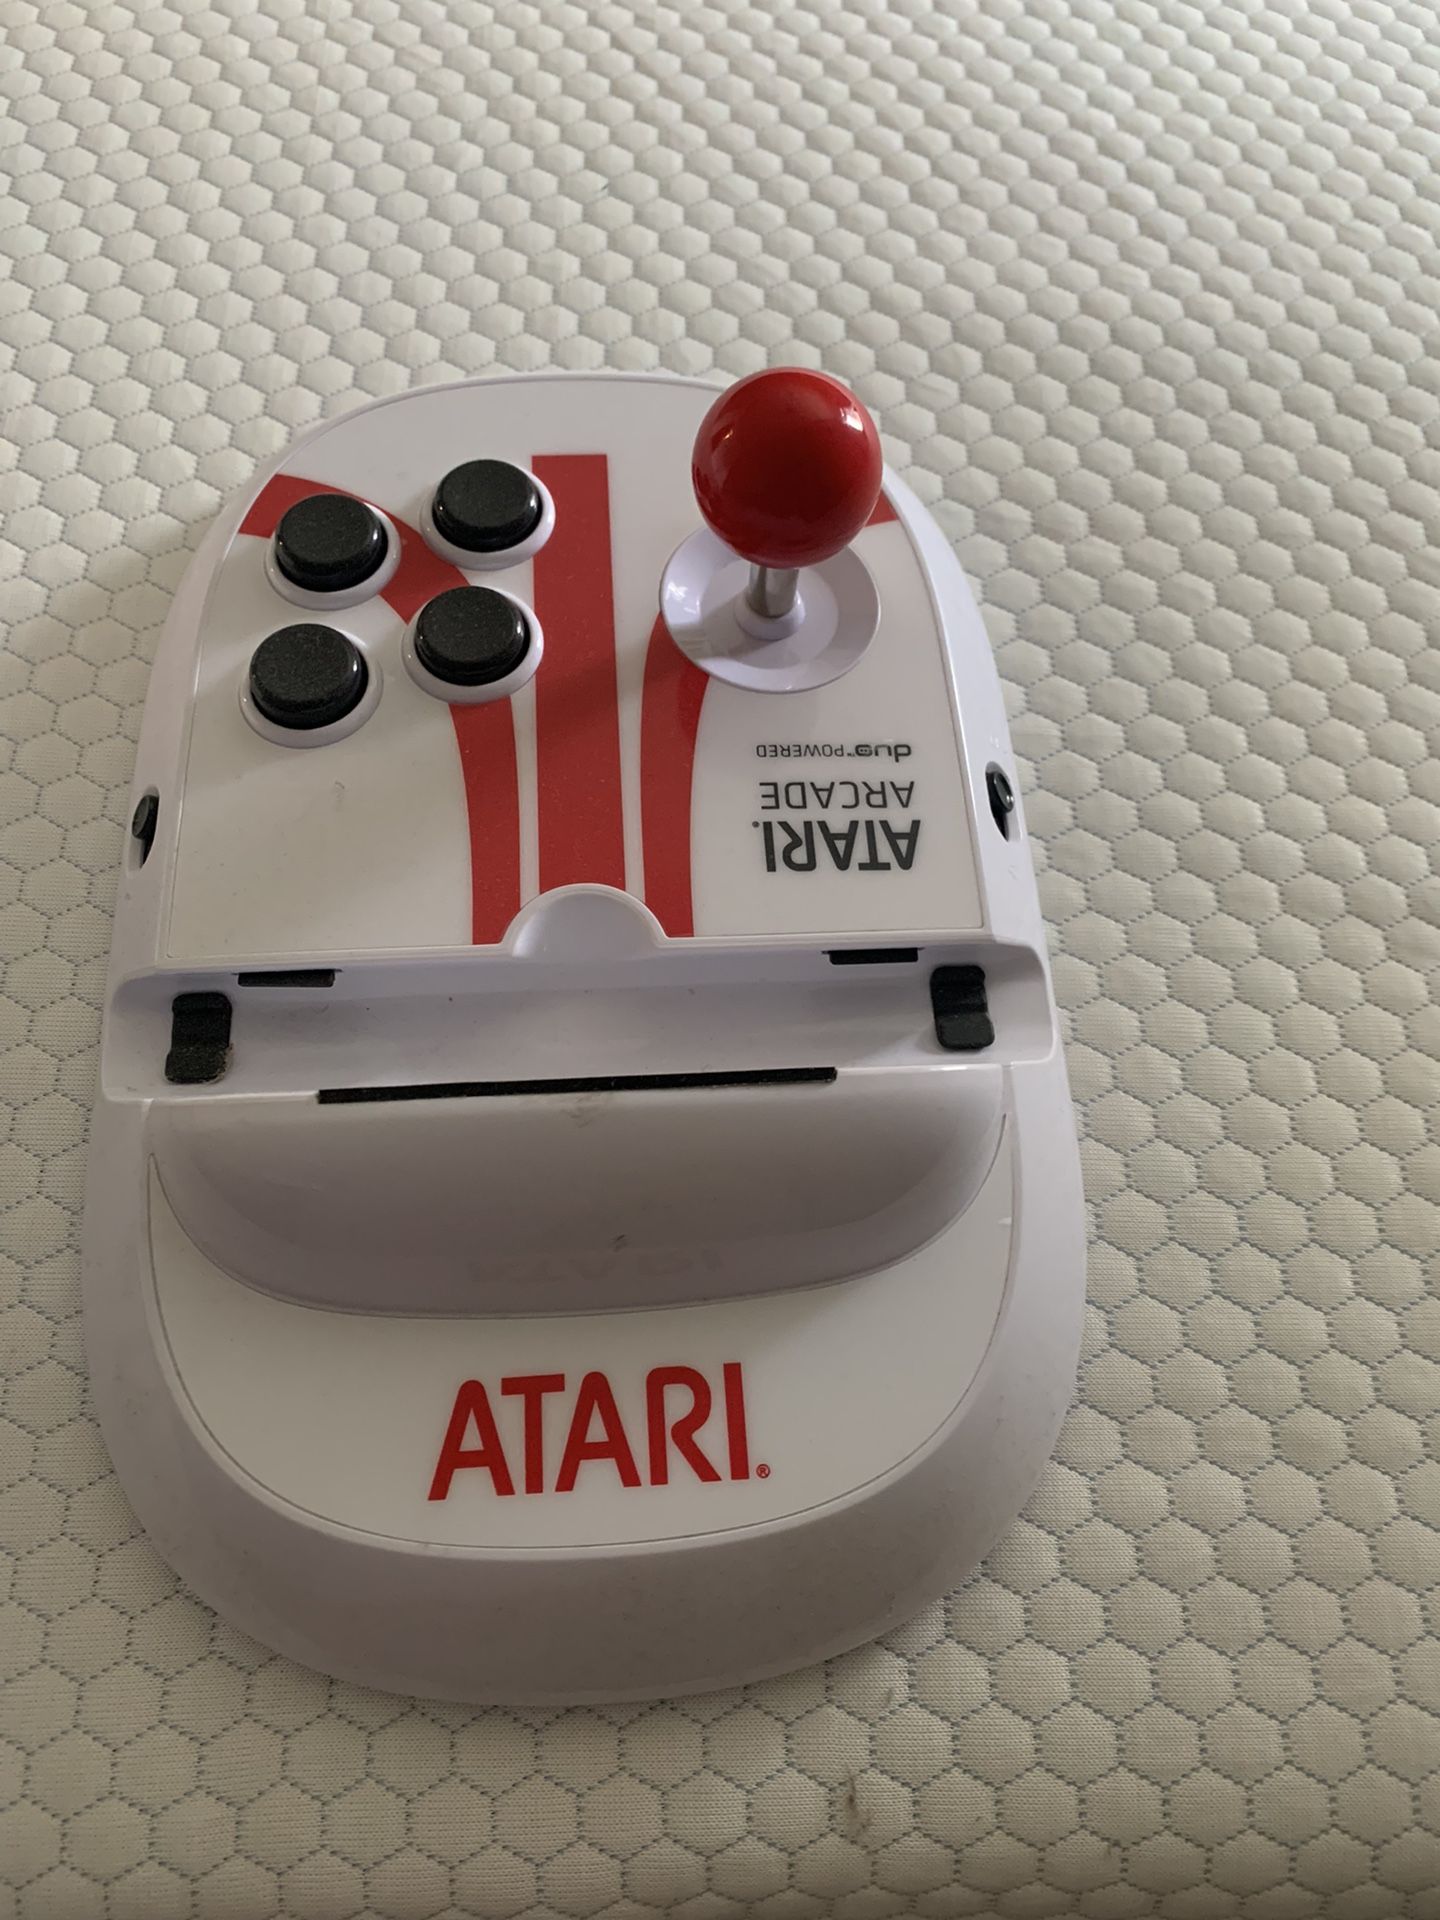 Atari arcade duo powered game